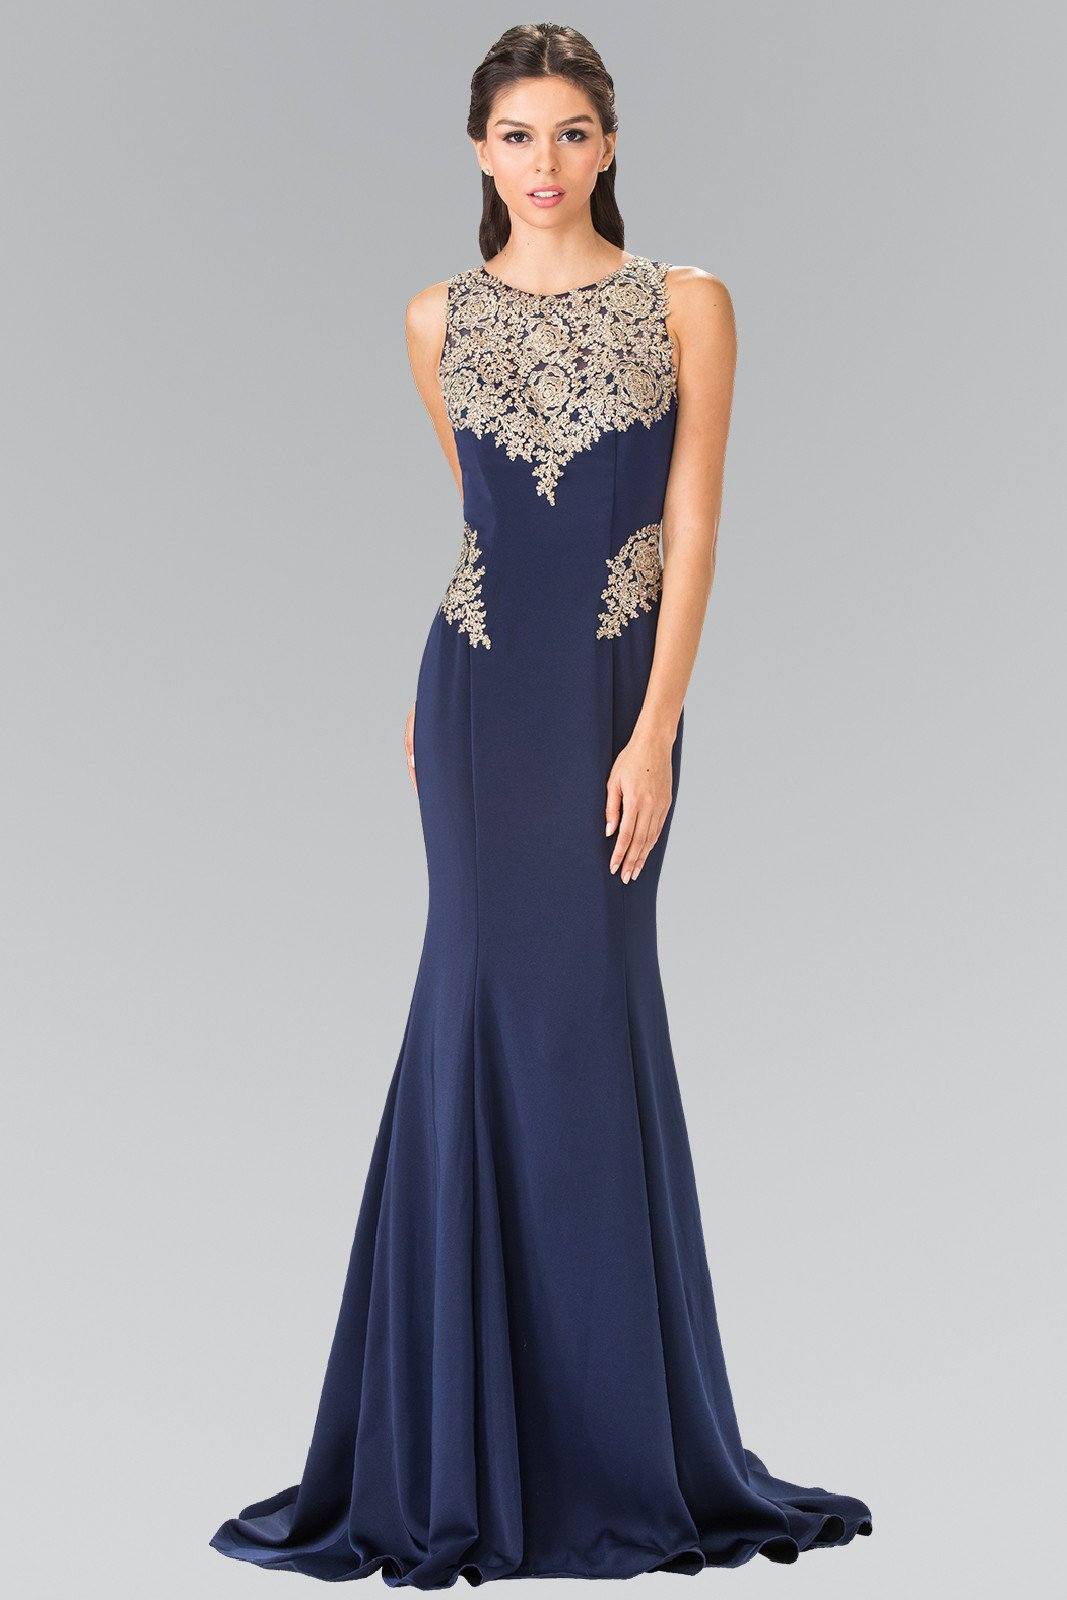 Long Sleeveless Embroidered Dress by Elizabeth K GL2312-Long Formal Dresses-ABC Fashion